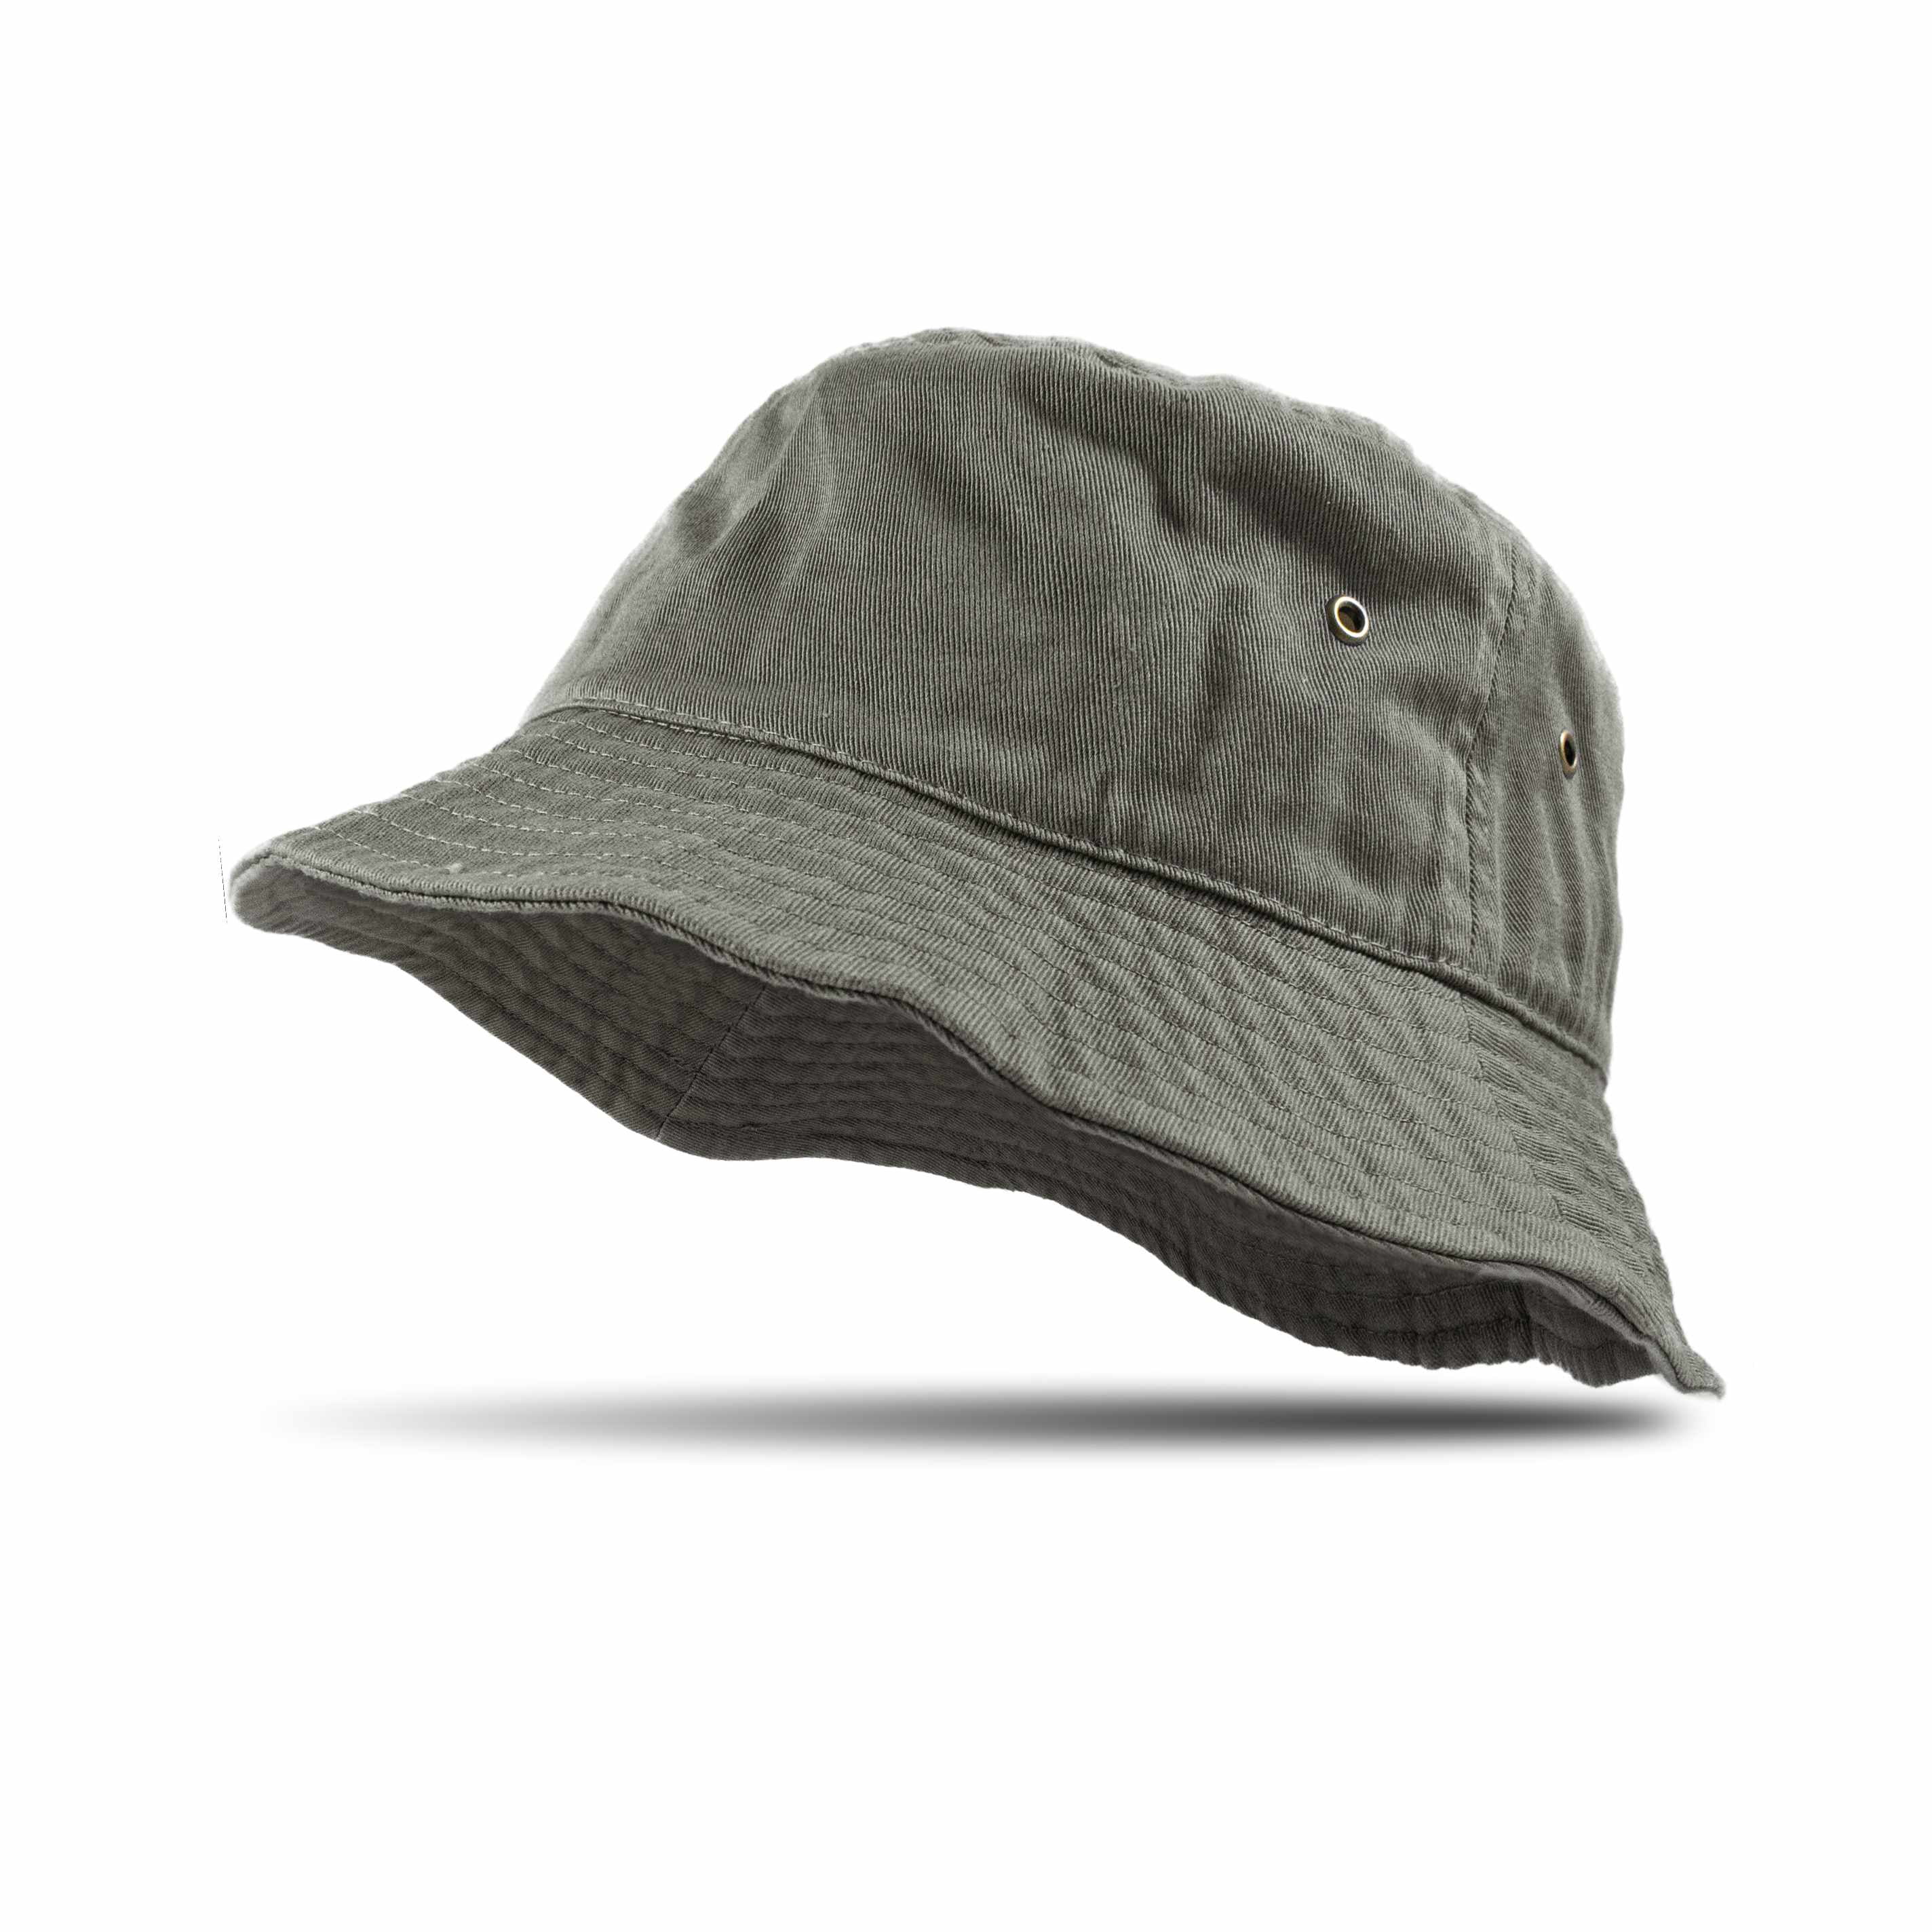 Bucket Hat 100% Cotton Packable Summer Travel Cap Sun hat for Men and Women  Black S/M 